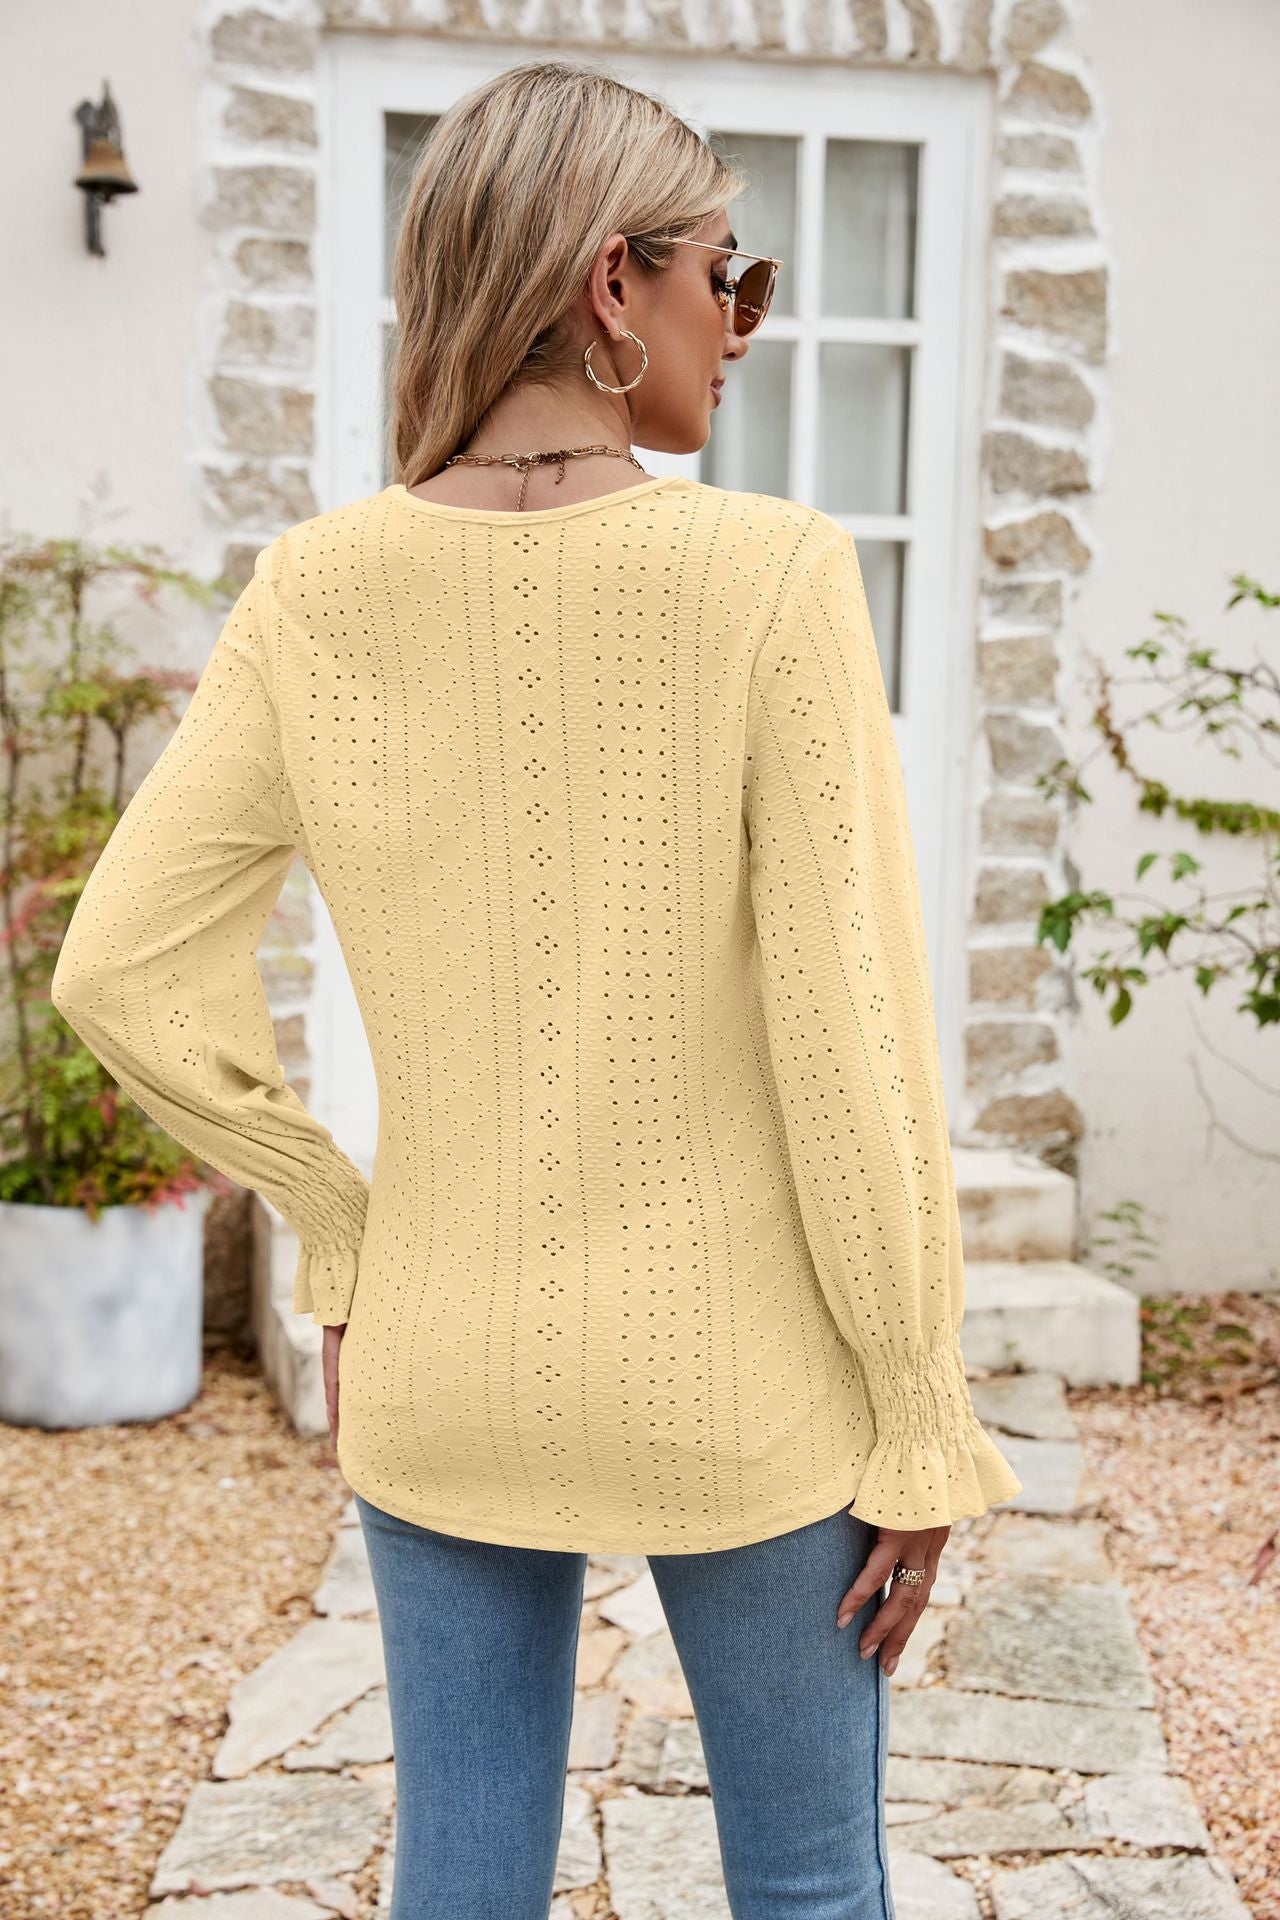 J.Jill Chenille Double-V Sweater Size XL